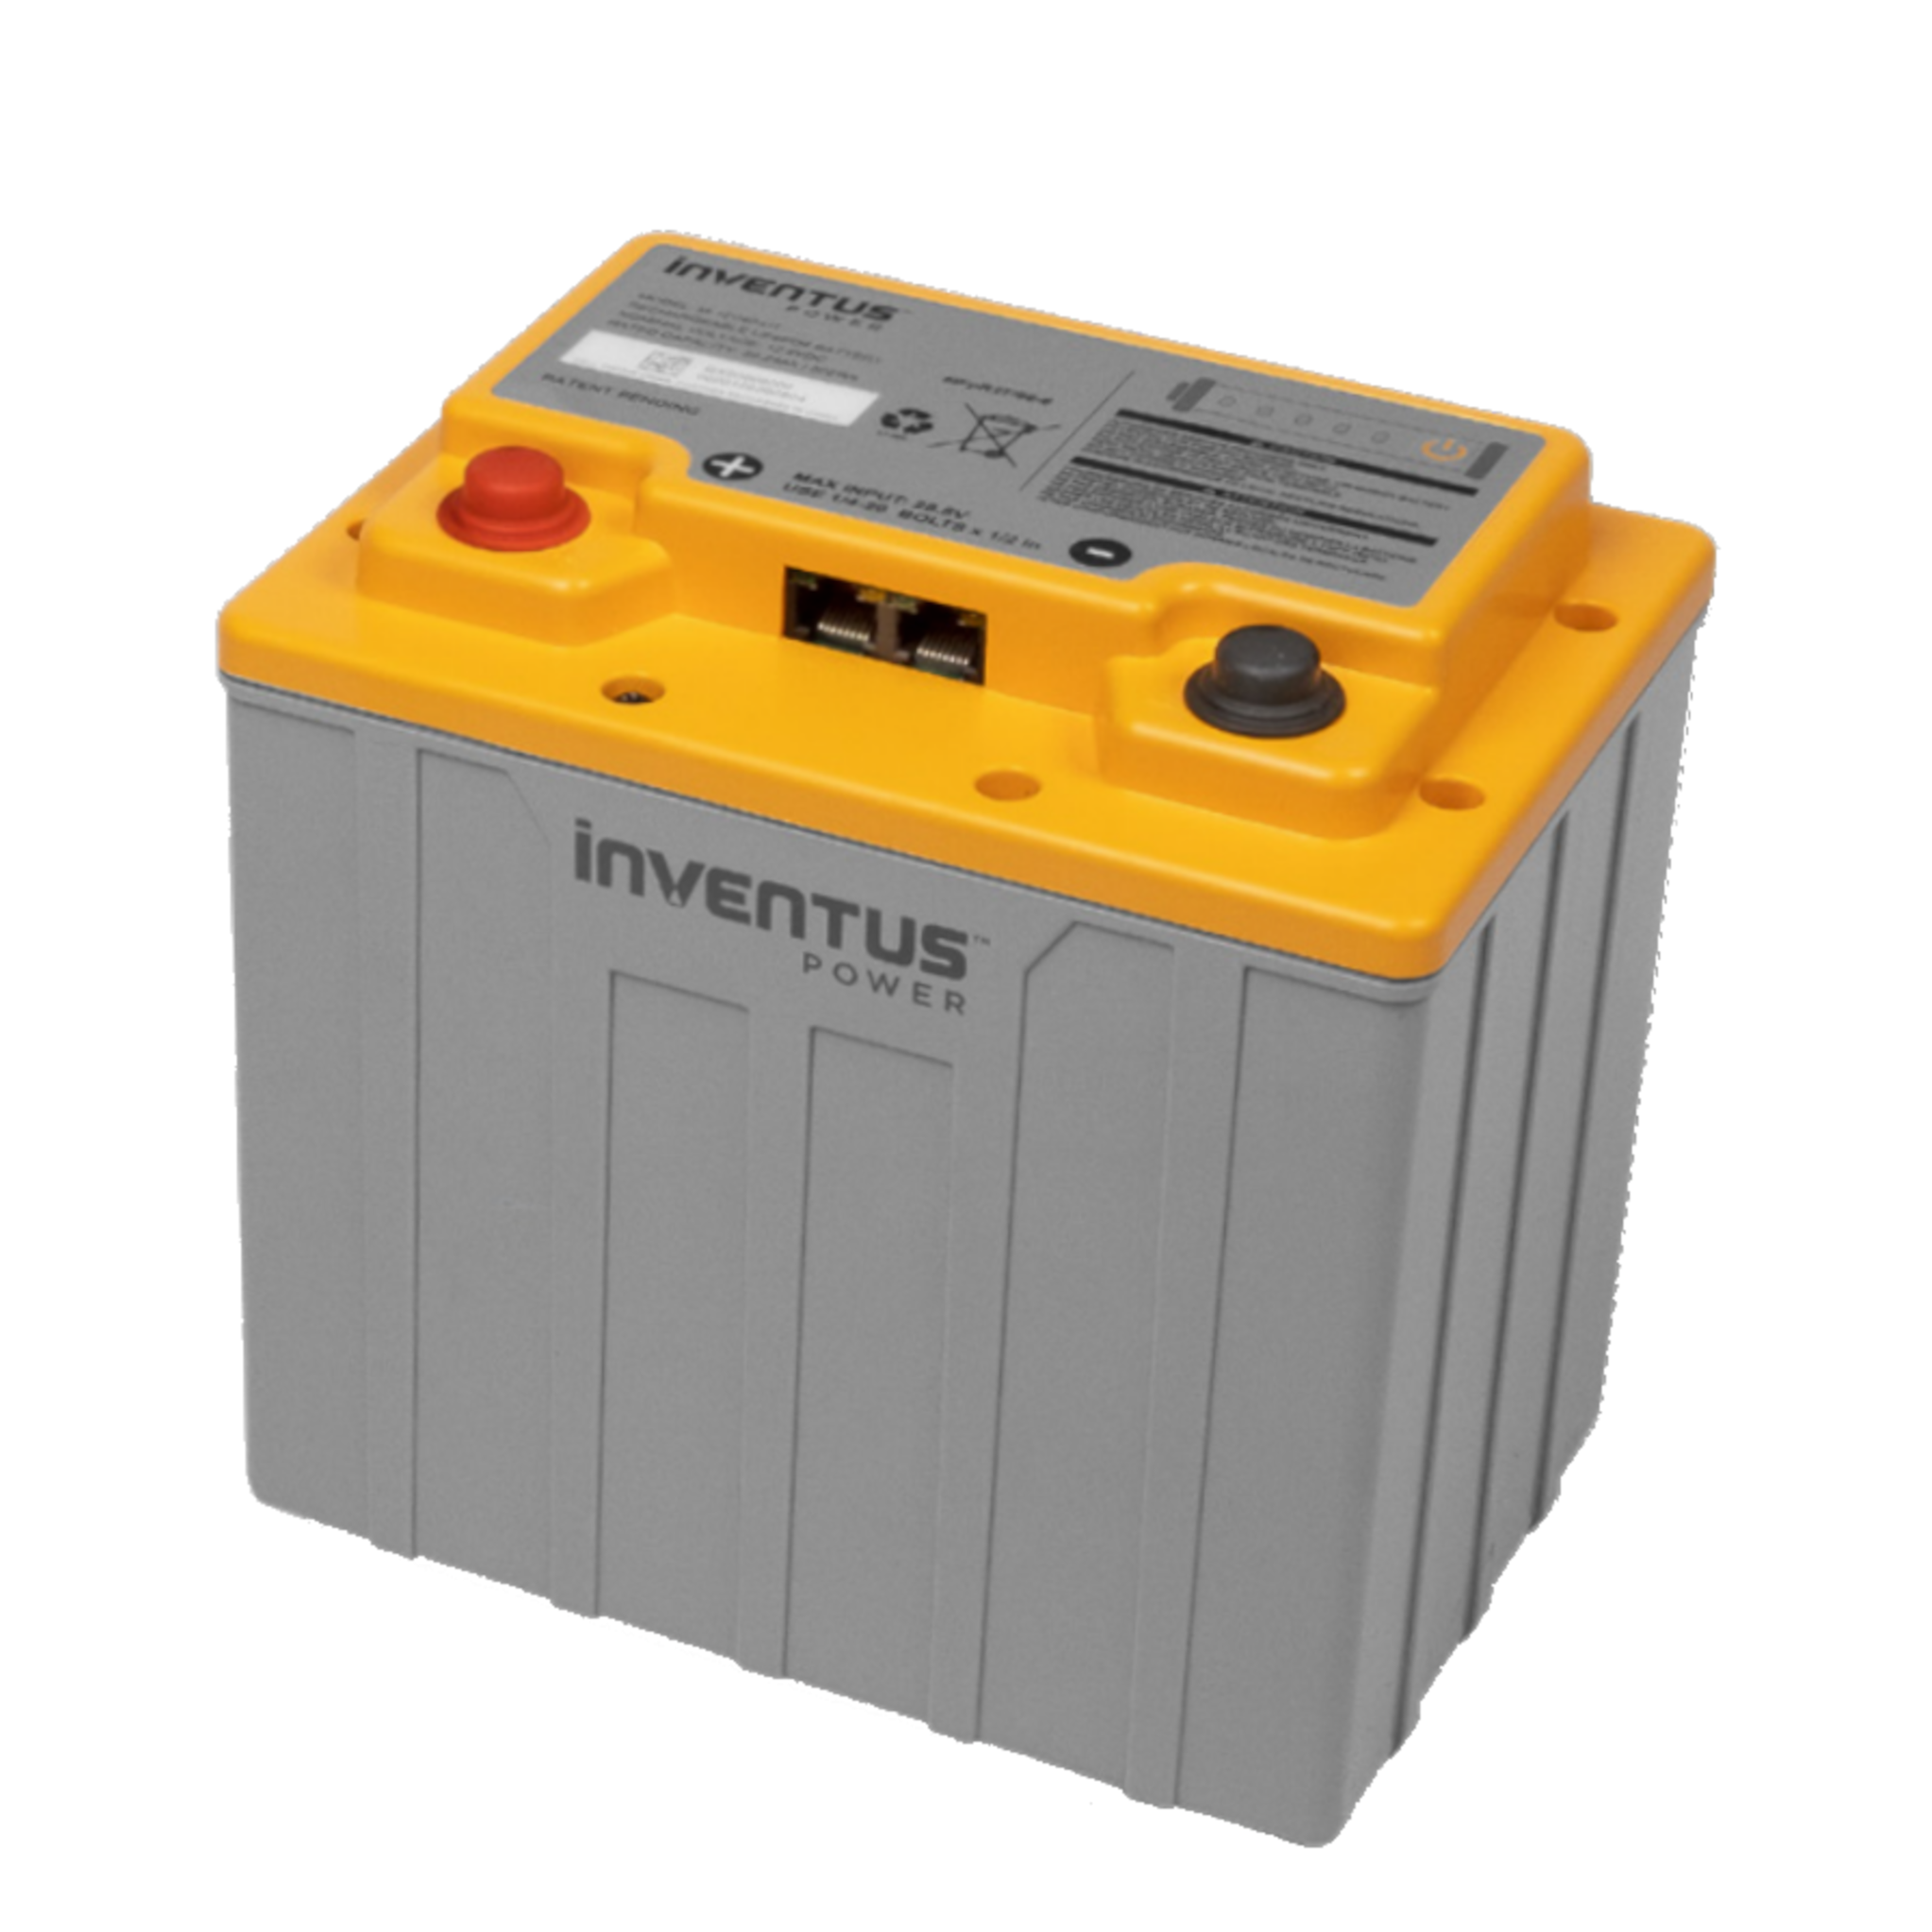 Inventus M-12V40-U1 Lithium Deep Cycle Battery